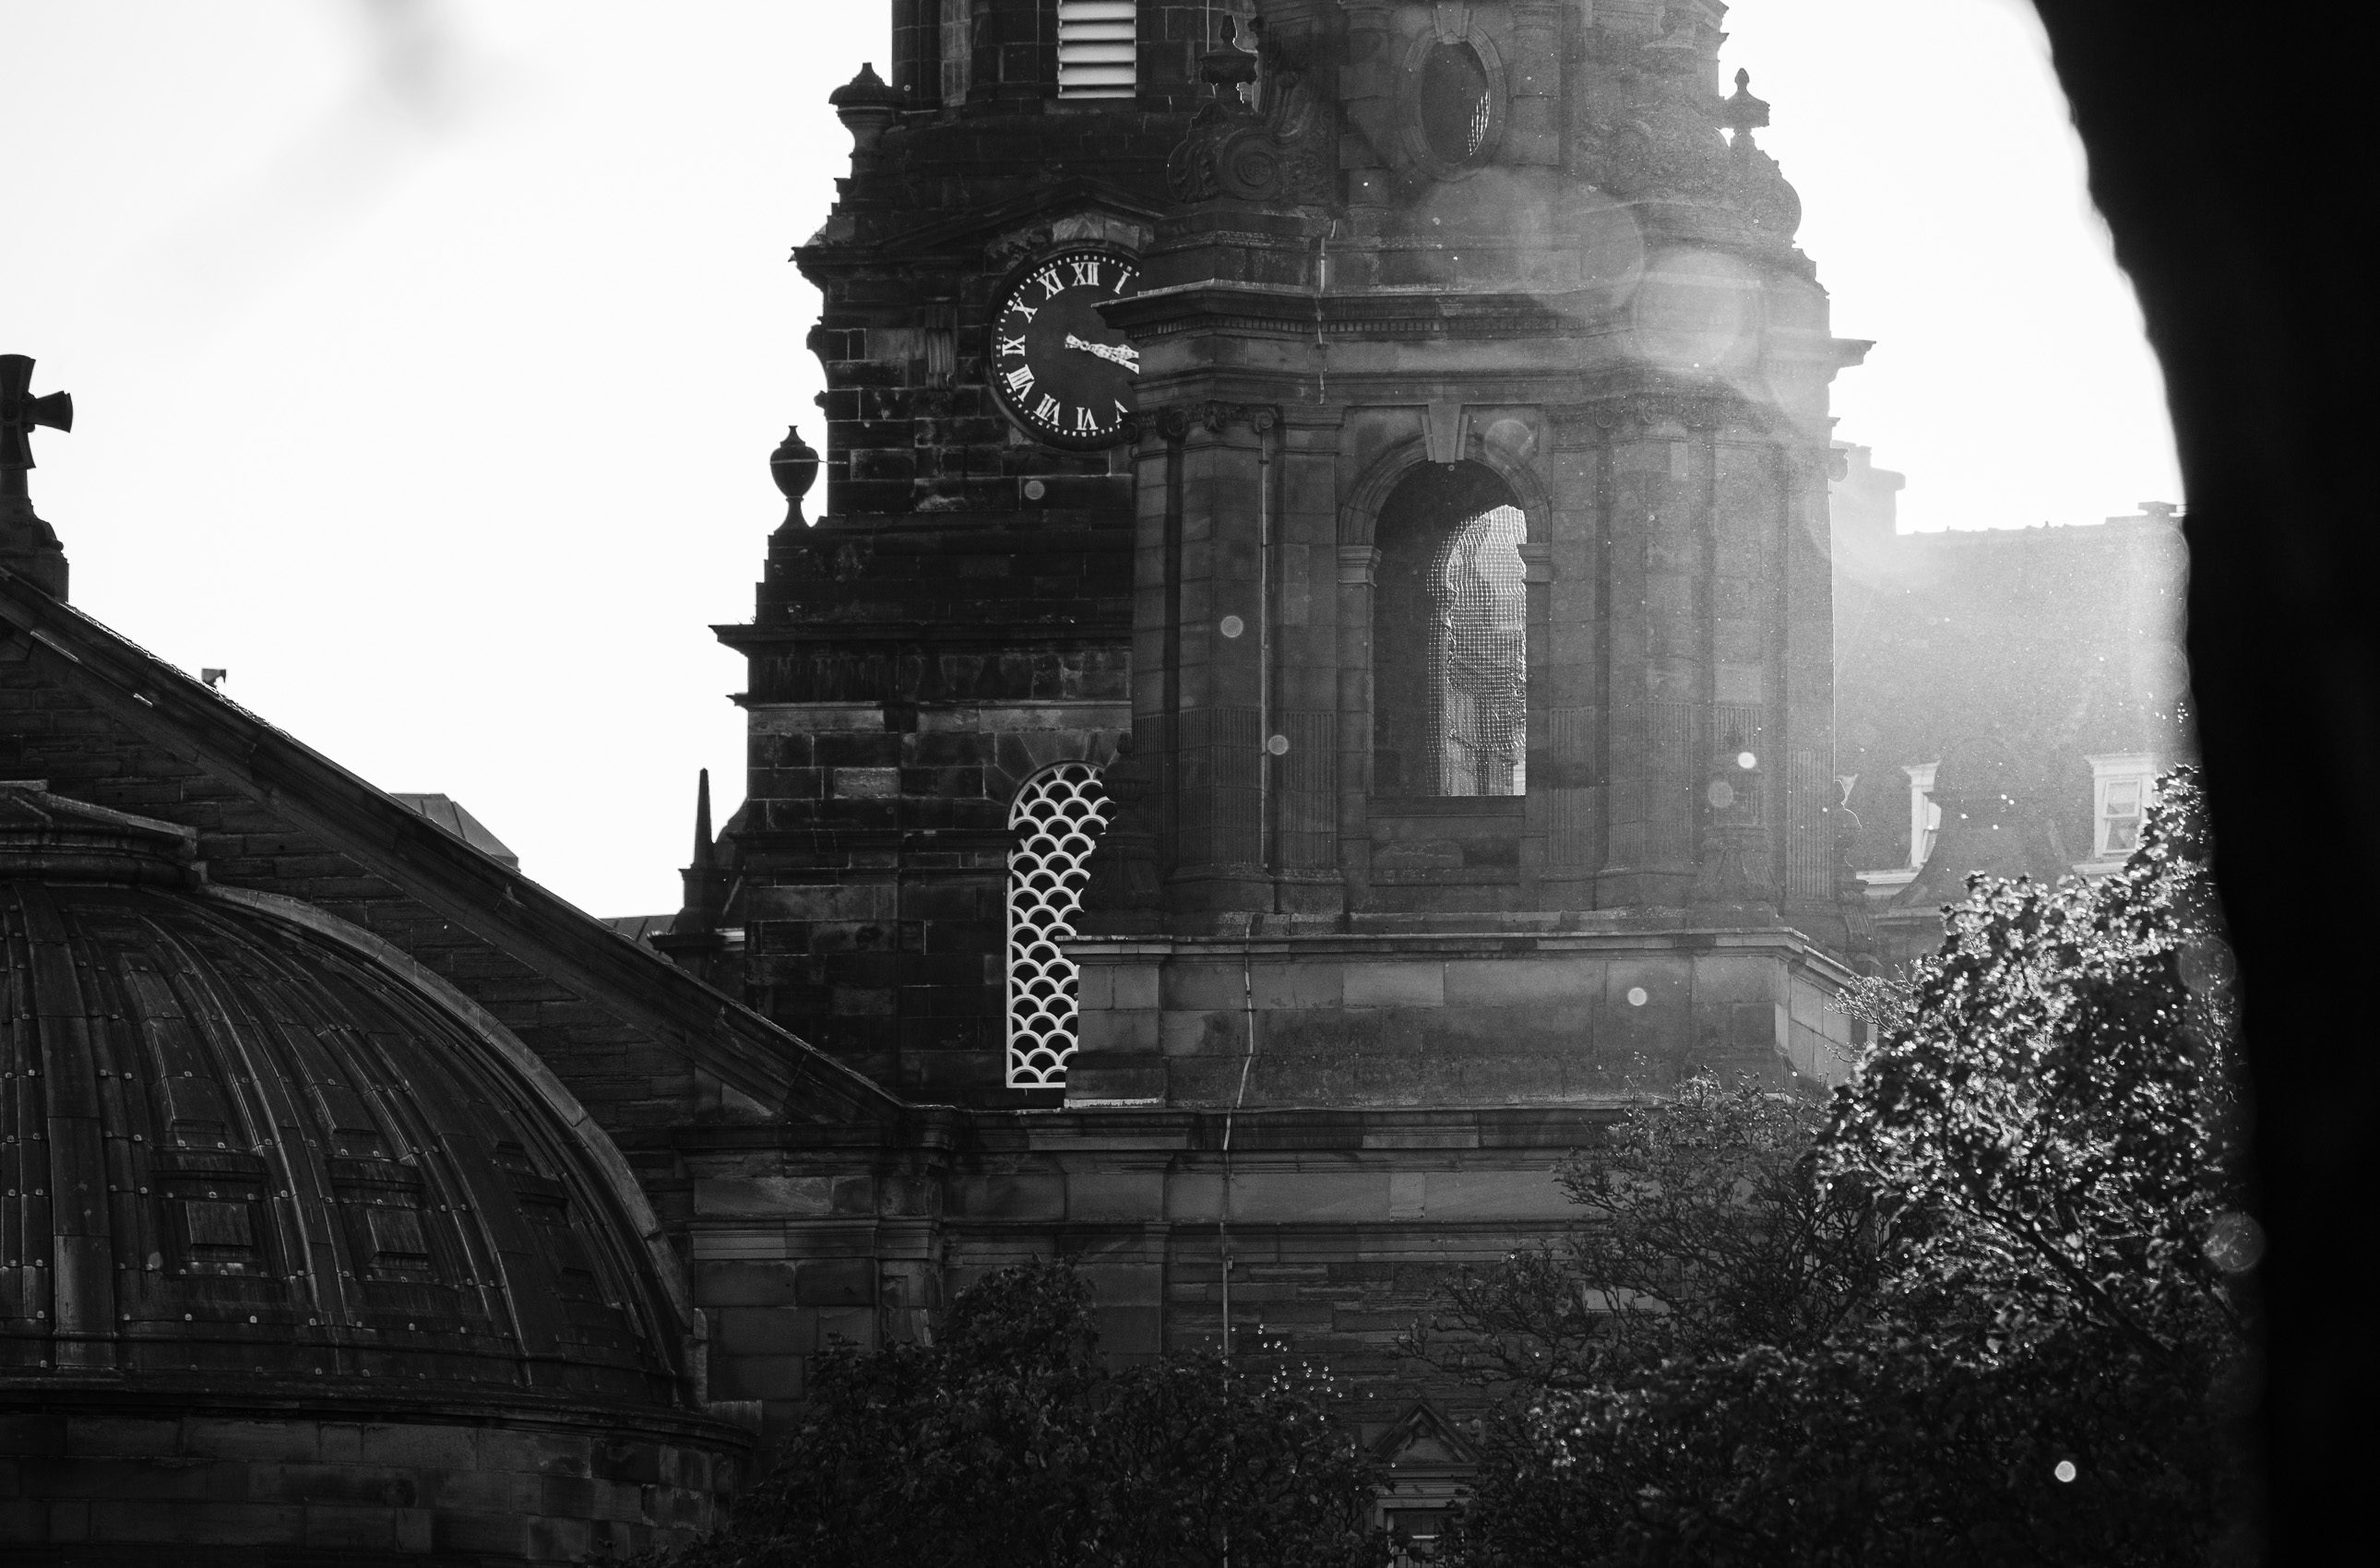 Monochrome (black and white) image of St Cuthbert's Parish Church at the west end of Princes Street Gardens, Edinburgh, Scotland, United Kingdom.